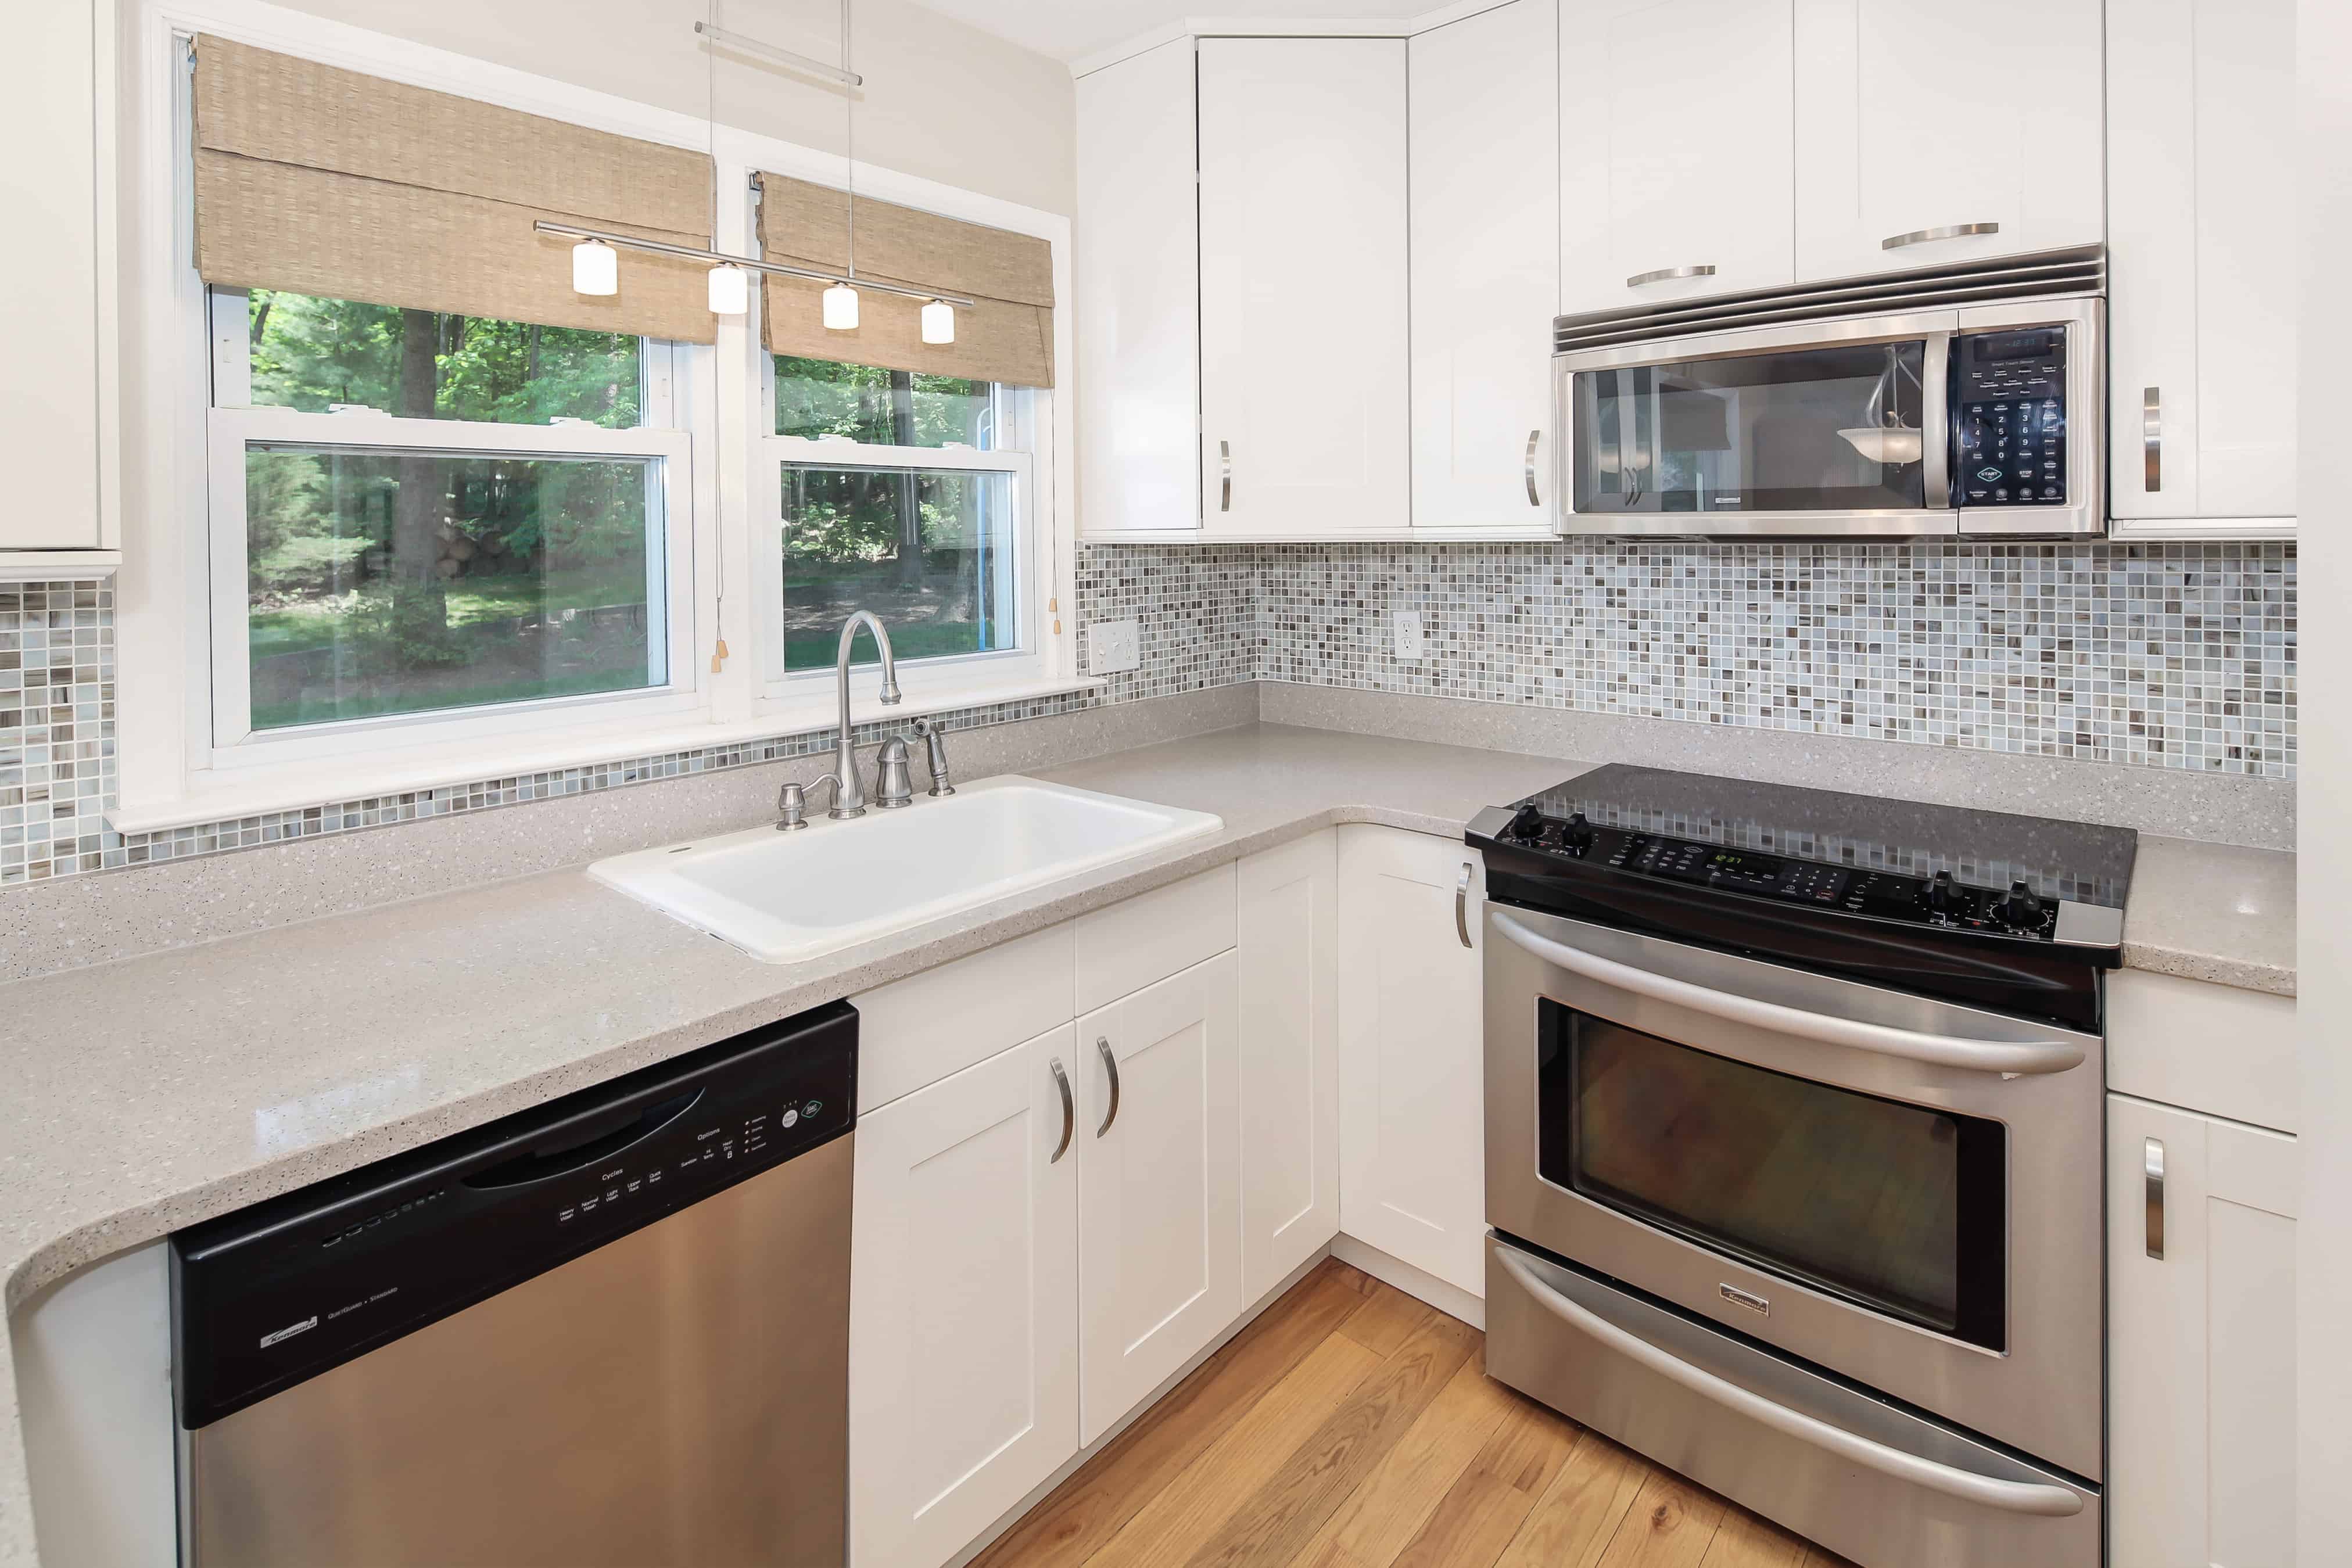 Budget kitchen with a tiled backsplash and chrome appliances